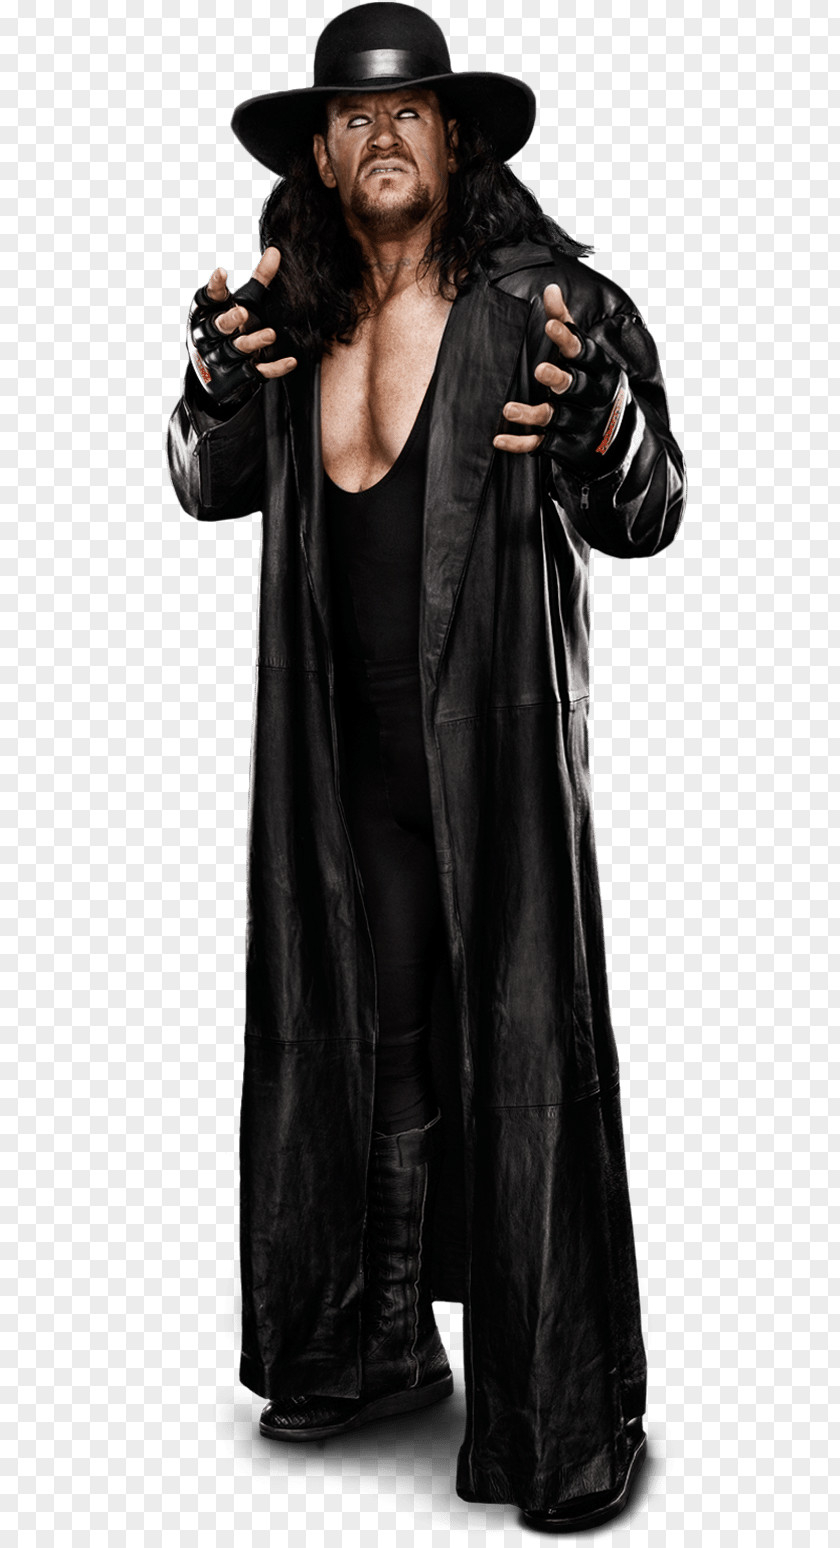 The Undertaker WrestleMania Professional Wrestling Clip Art PNG